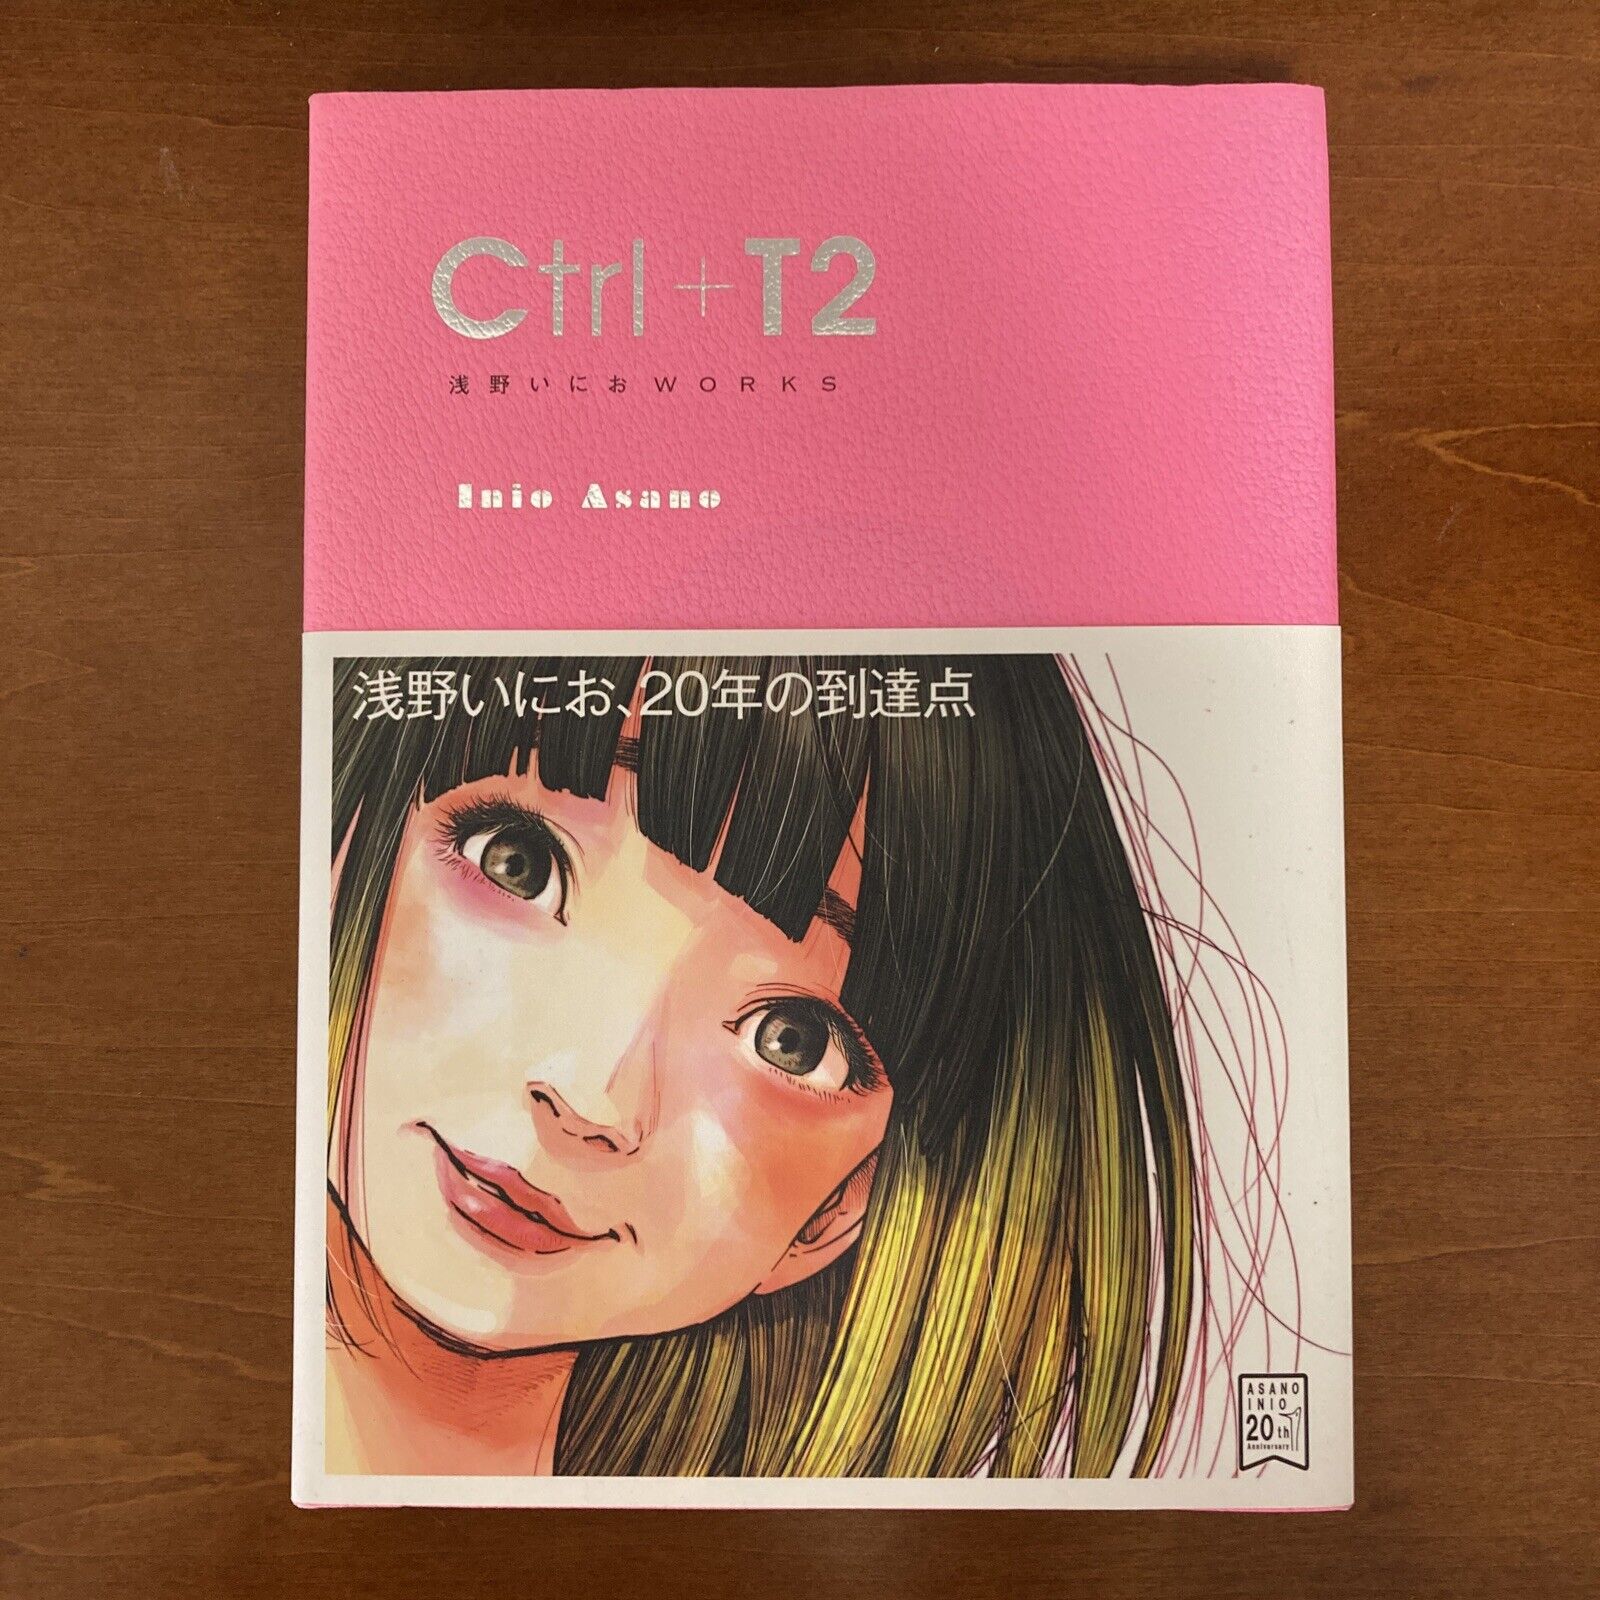 Ctrl+T2 Inio Asano Art Works 20th Anniversary Art Book Illustration